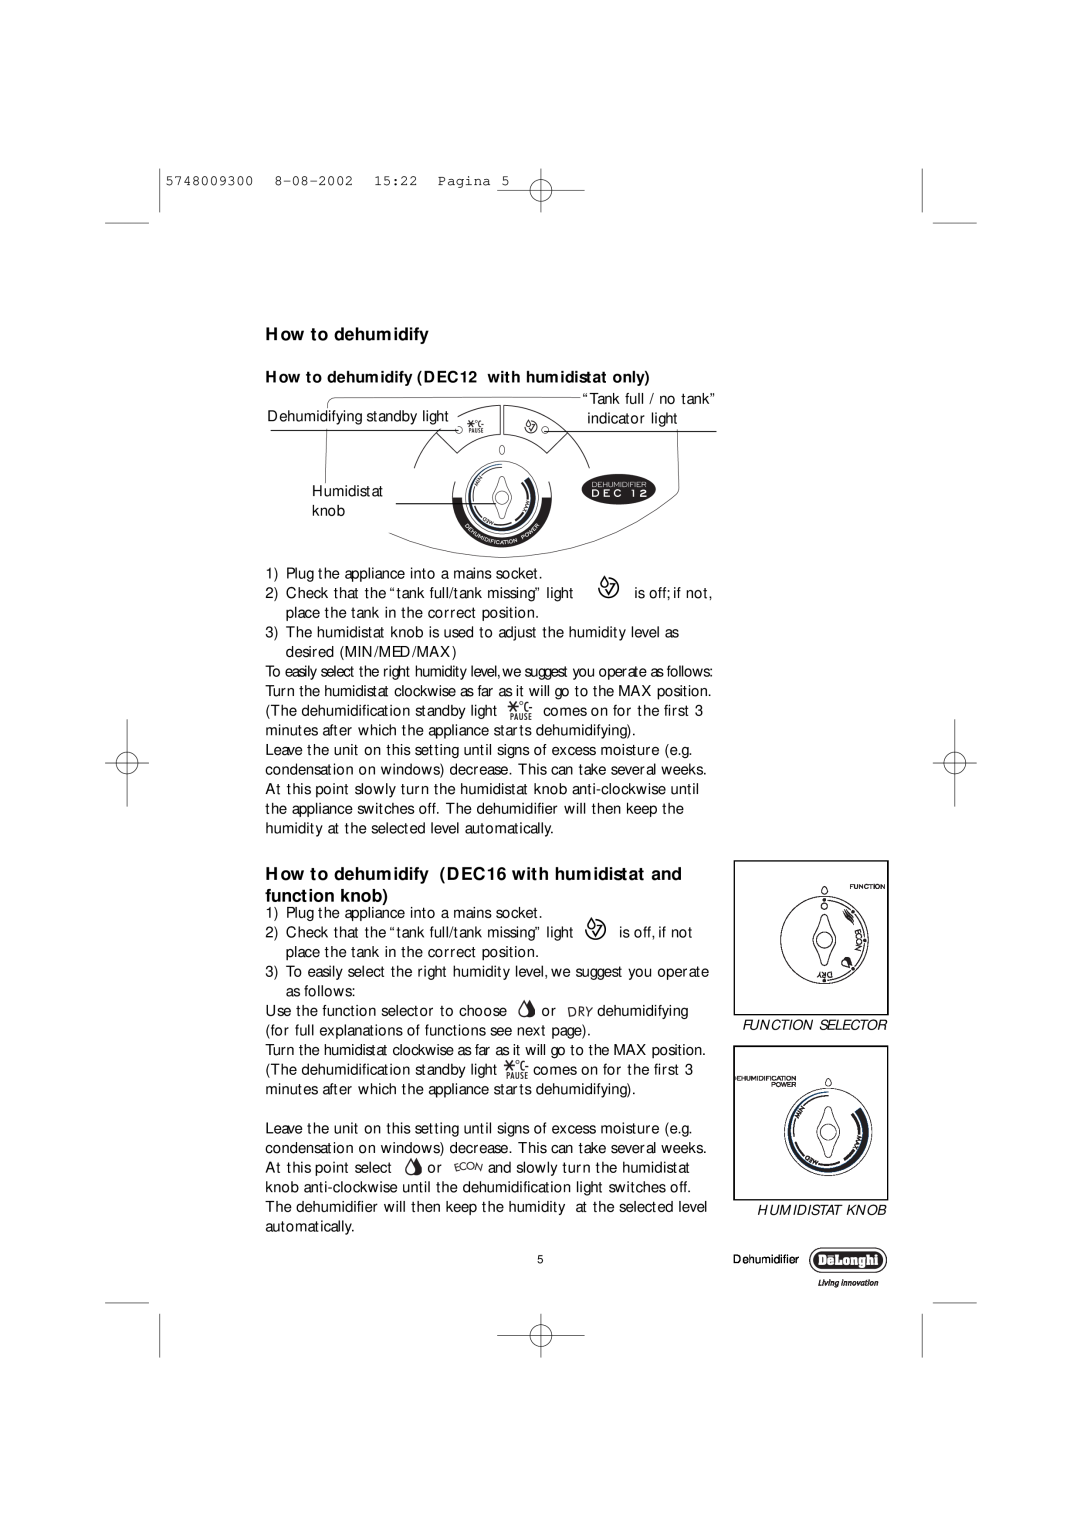 DeLonghi DEC16 manual How to dehumidify DEC12 with humidistat only, Function Selector Humidistat Knob 